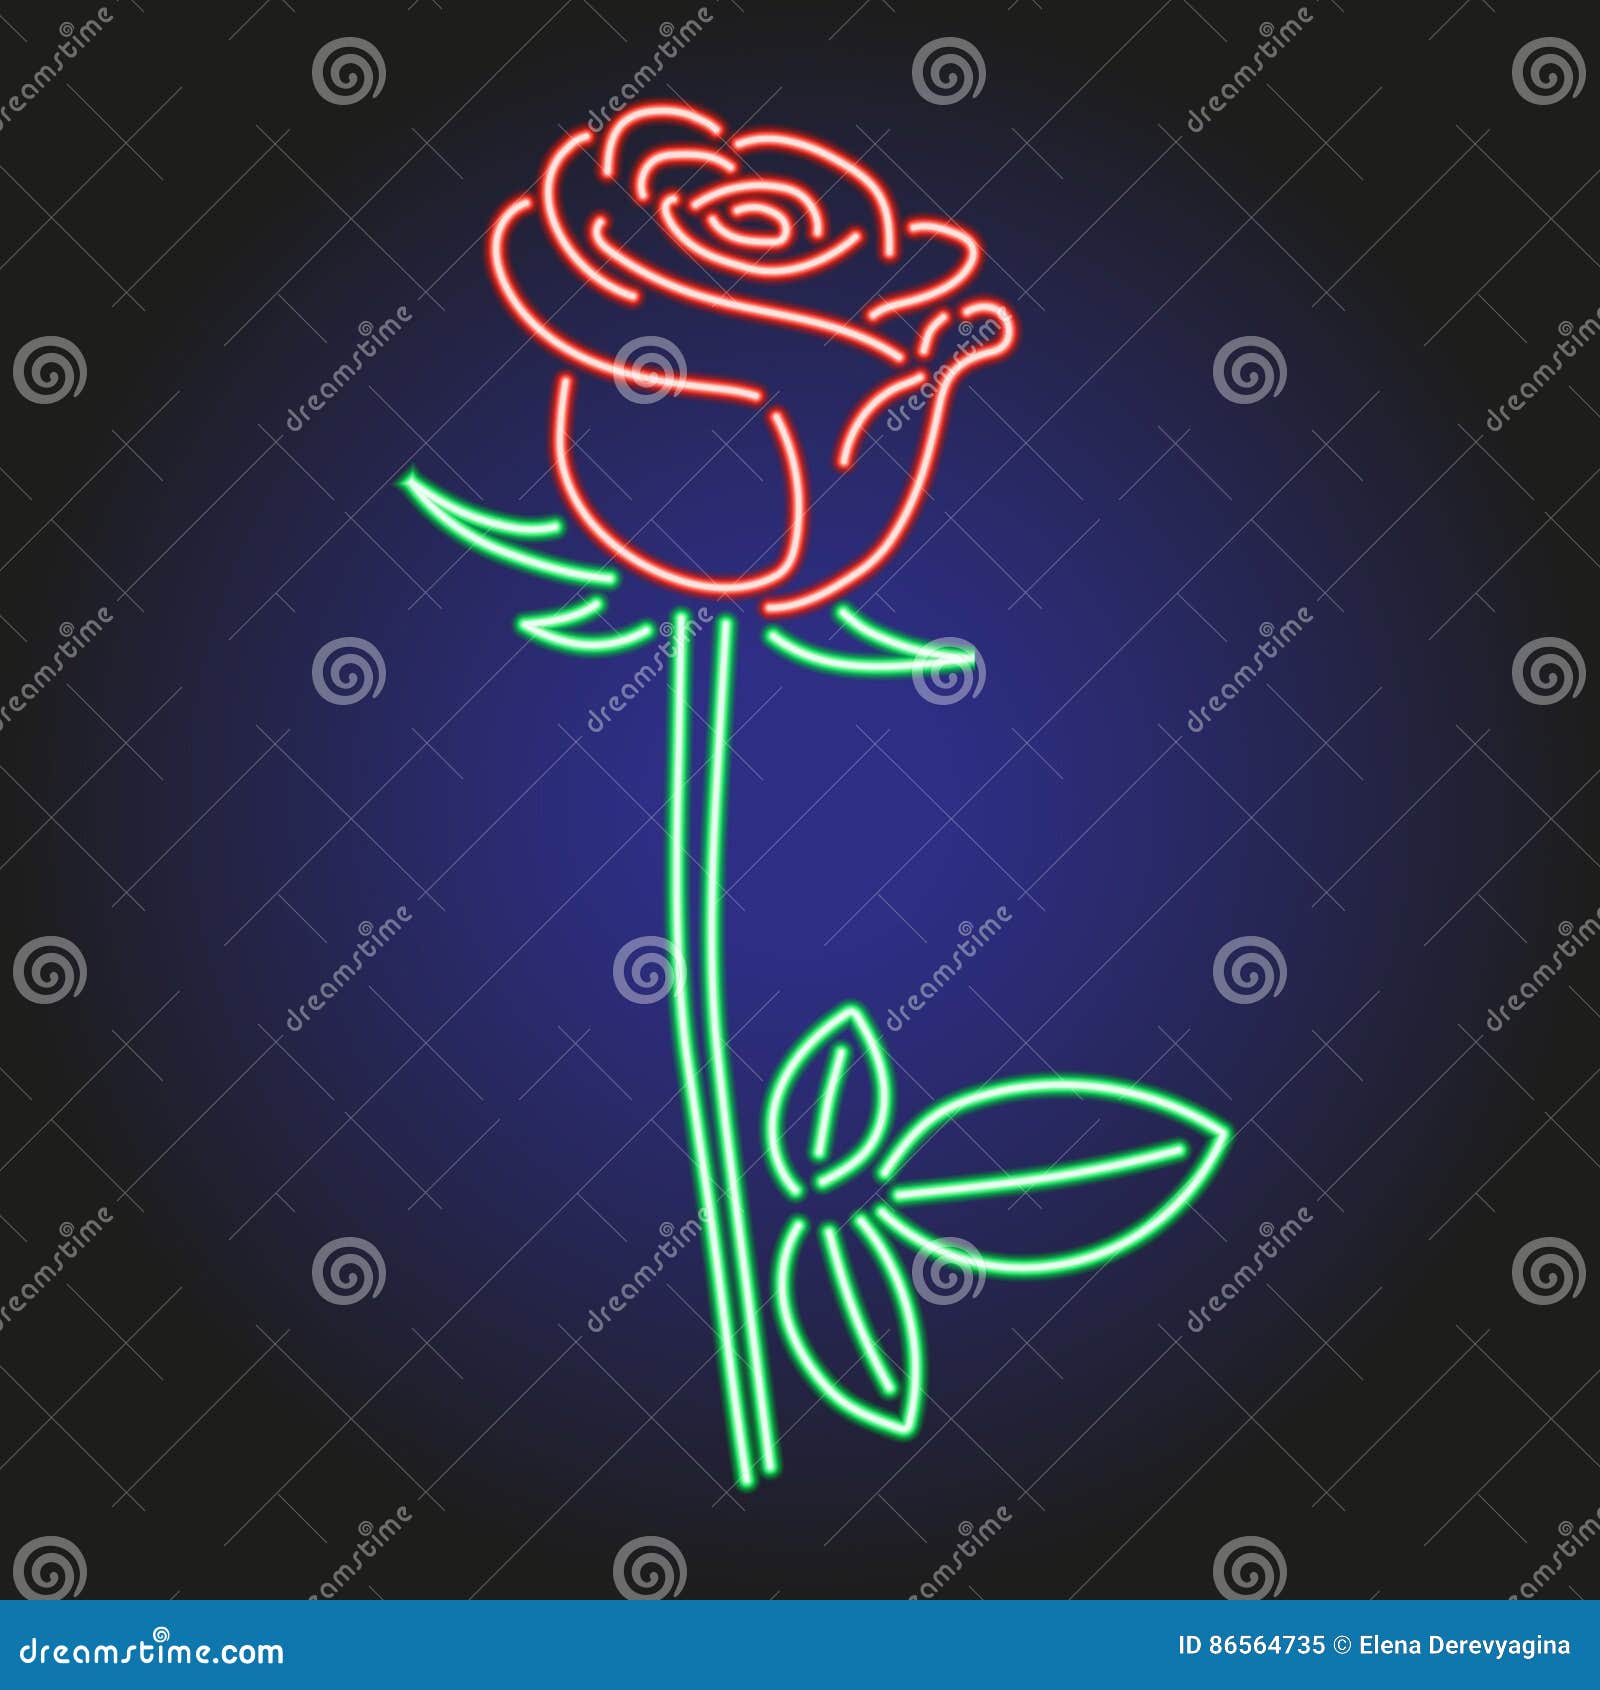 https://thumbs.dreamstime.com/z/rose-neon-glowing-dark-background-vector-illustration-86564735.jpg